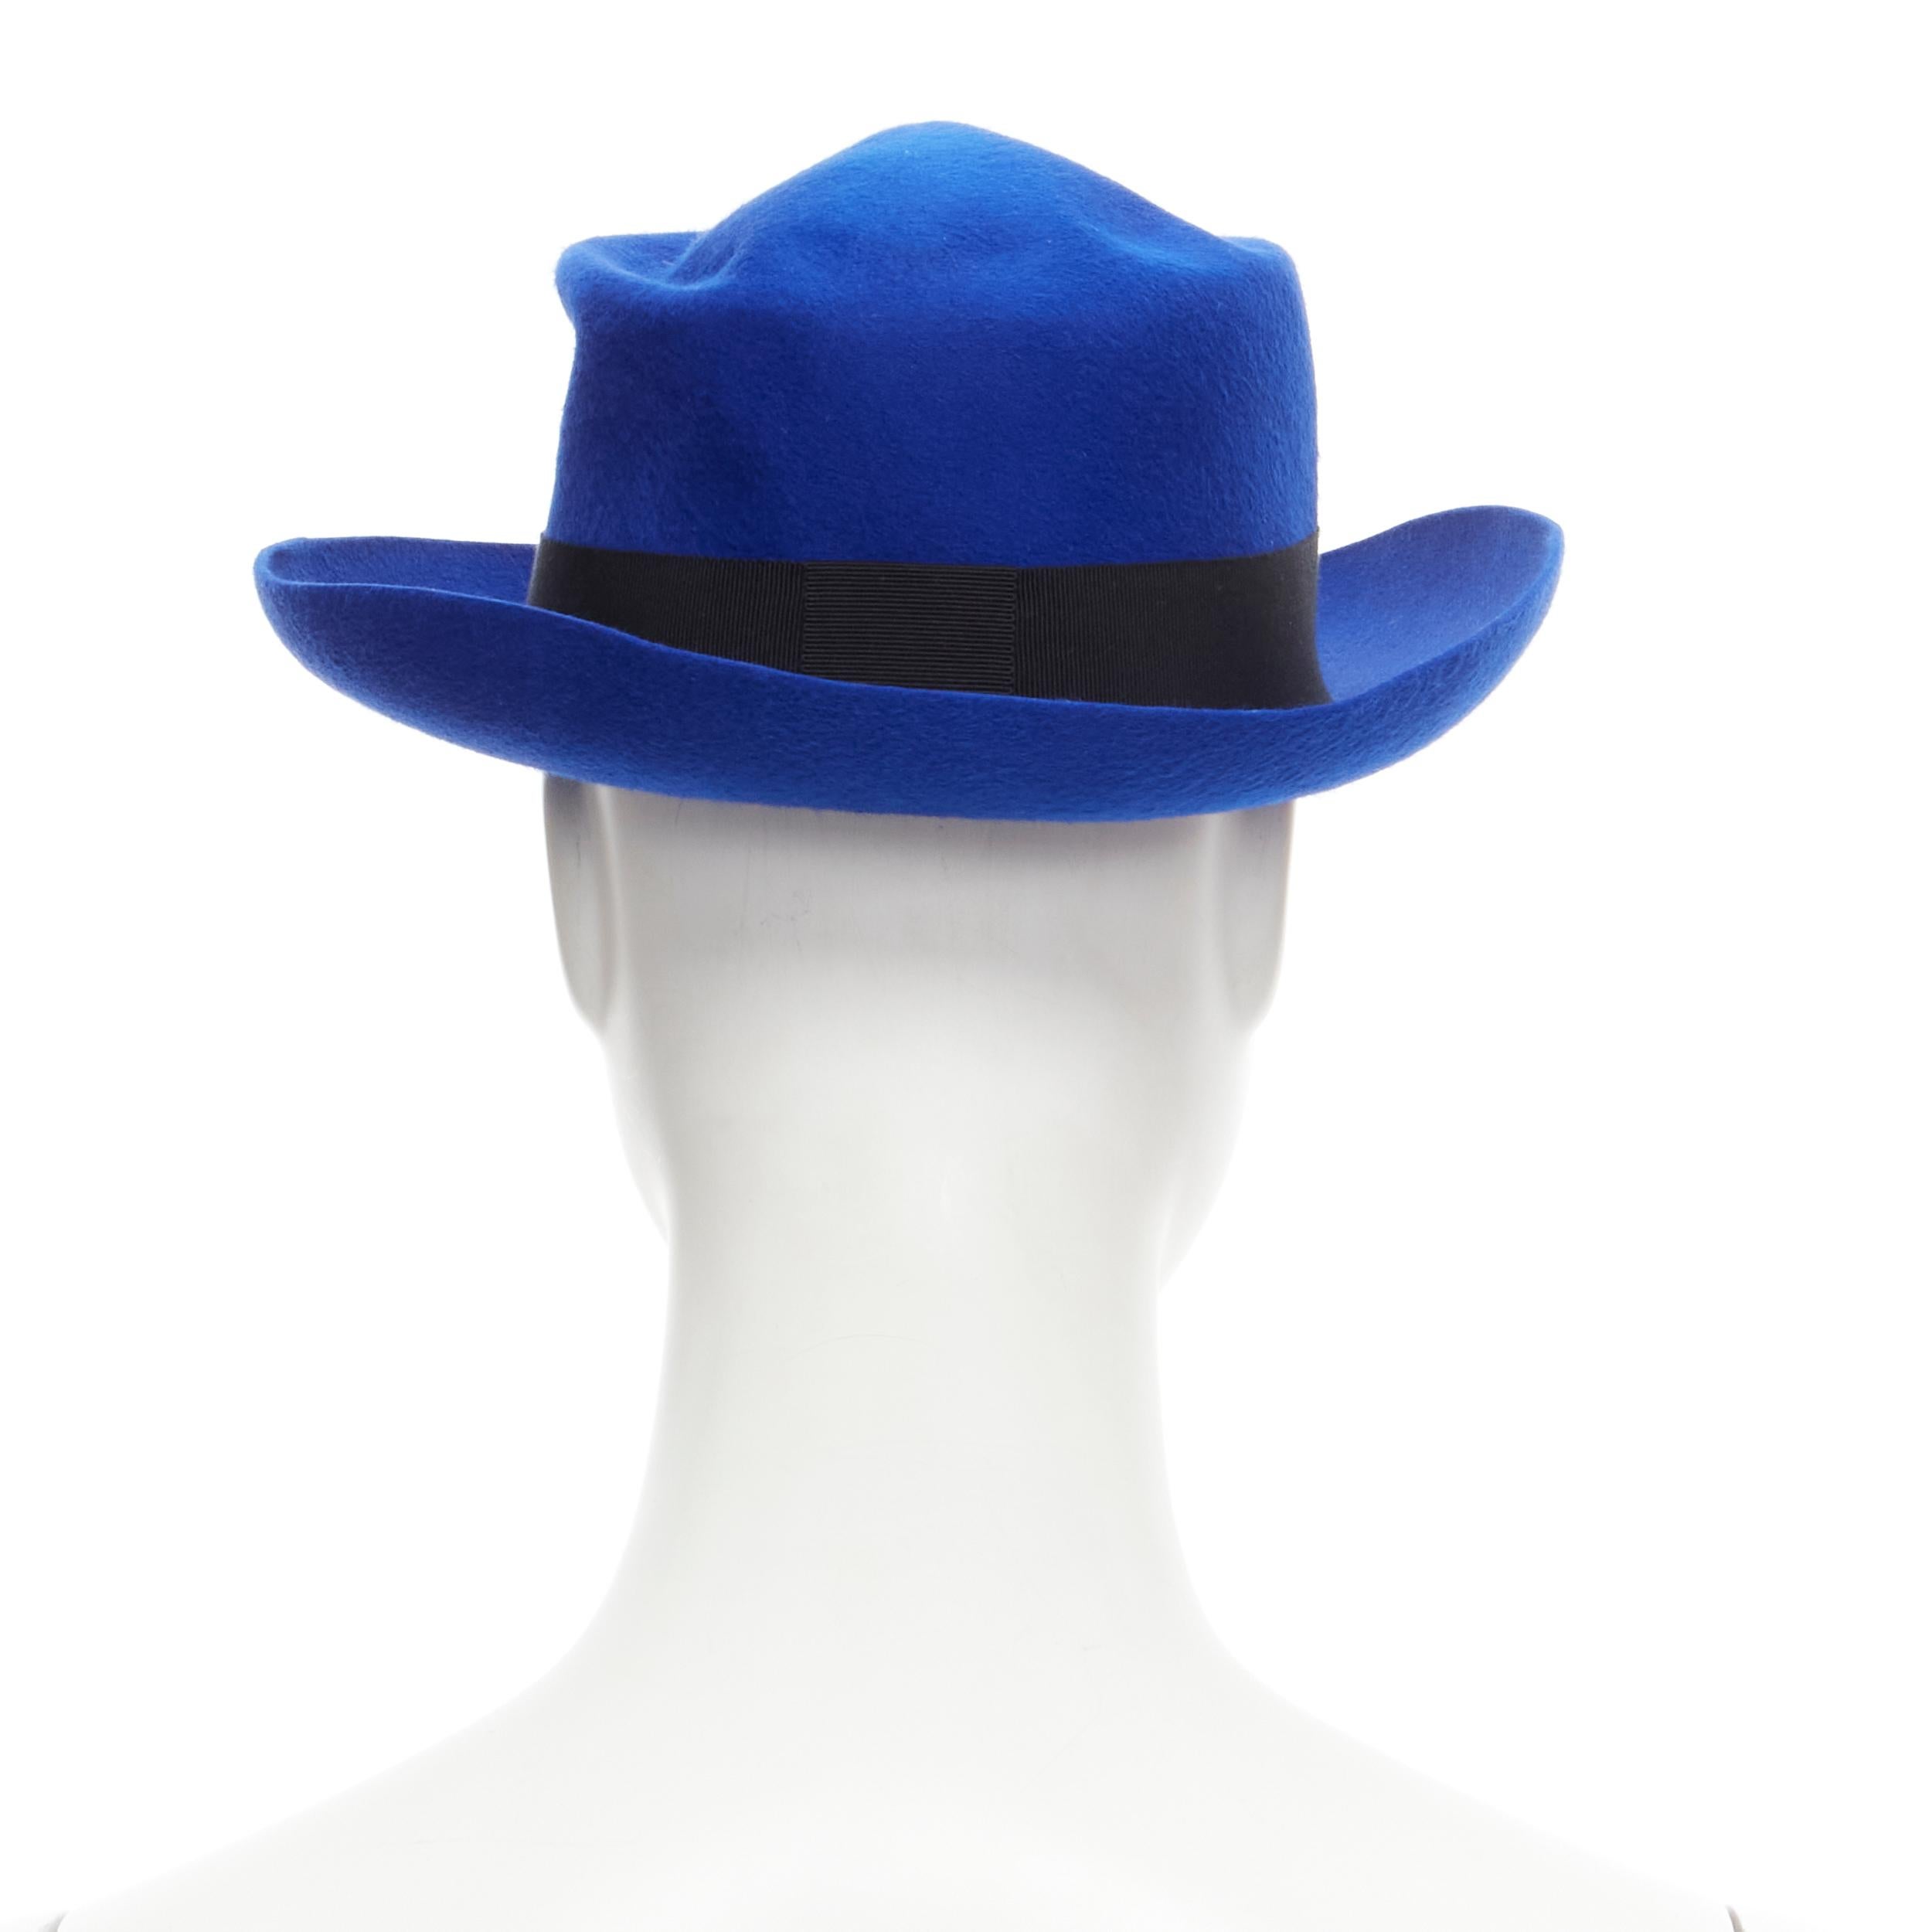 light blue felt hat